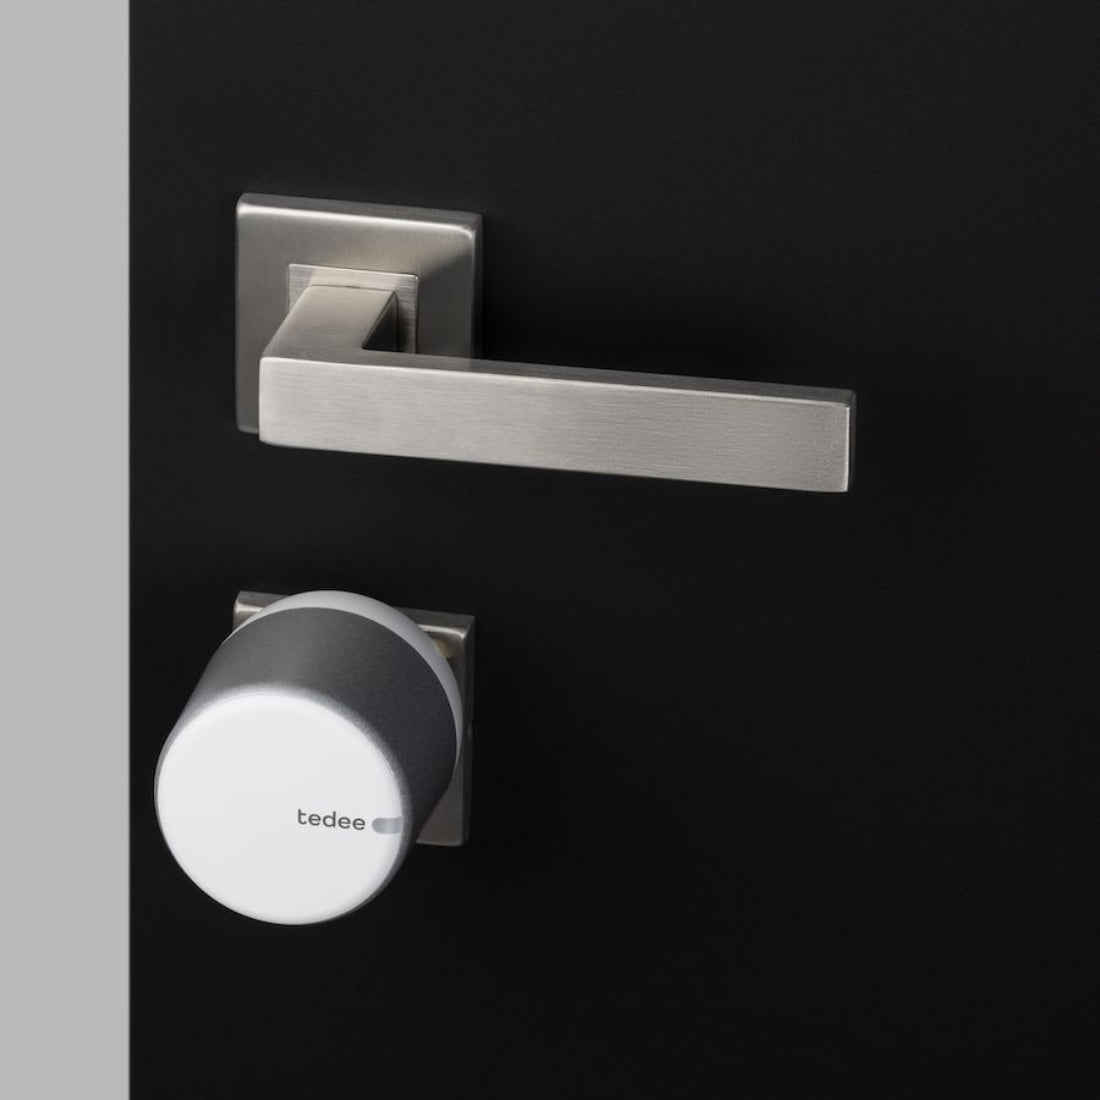 Tedee Go Smart Door Lock Kit - Silver/White - قفل ذكية - Store 974 | ستور ٩٧٤